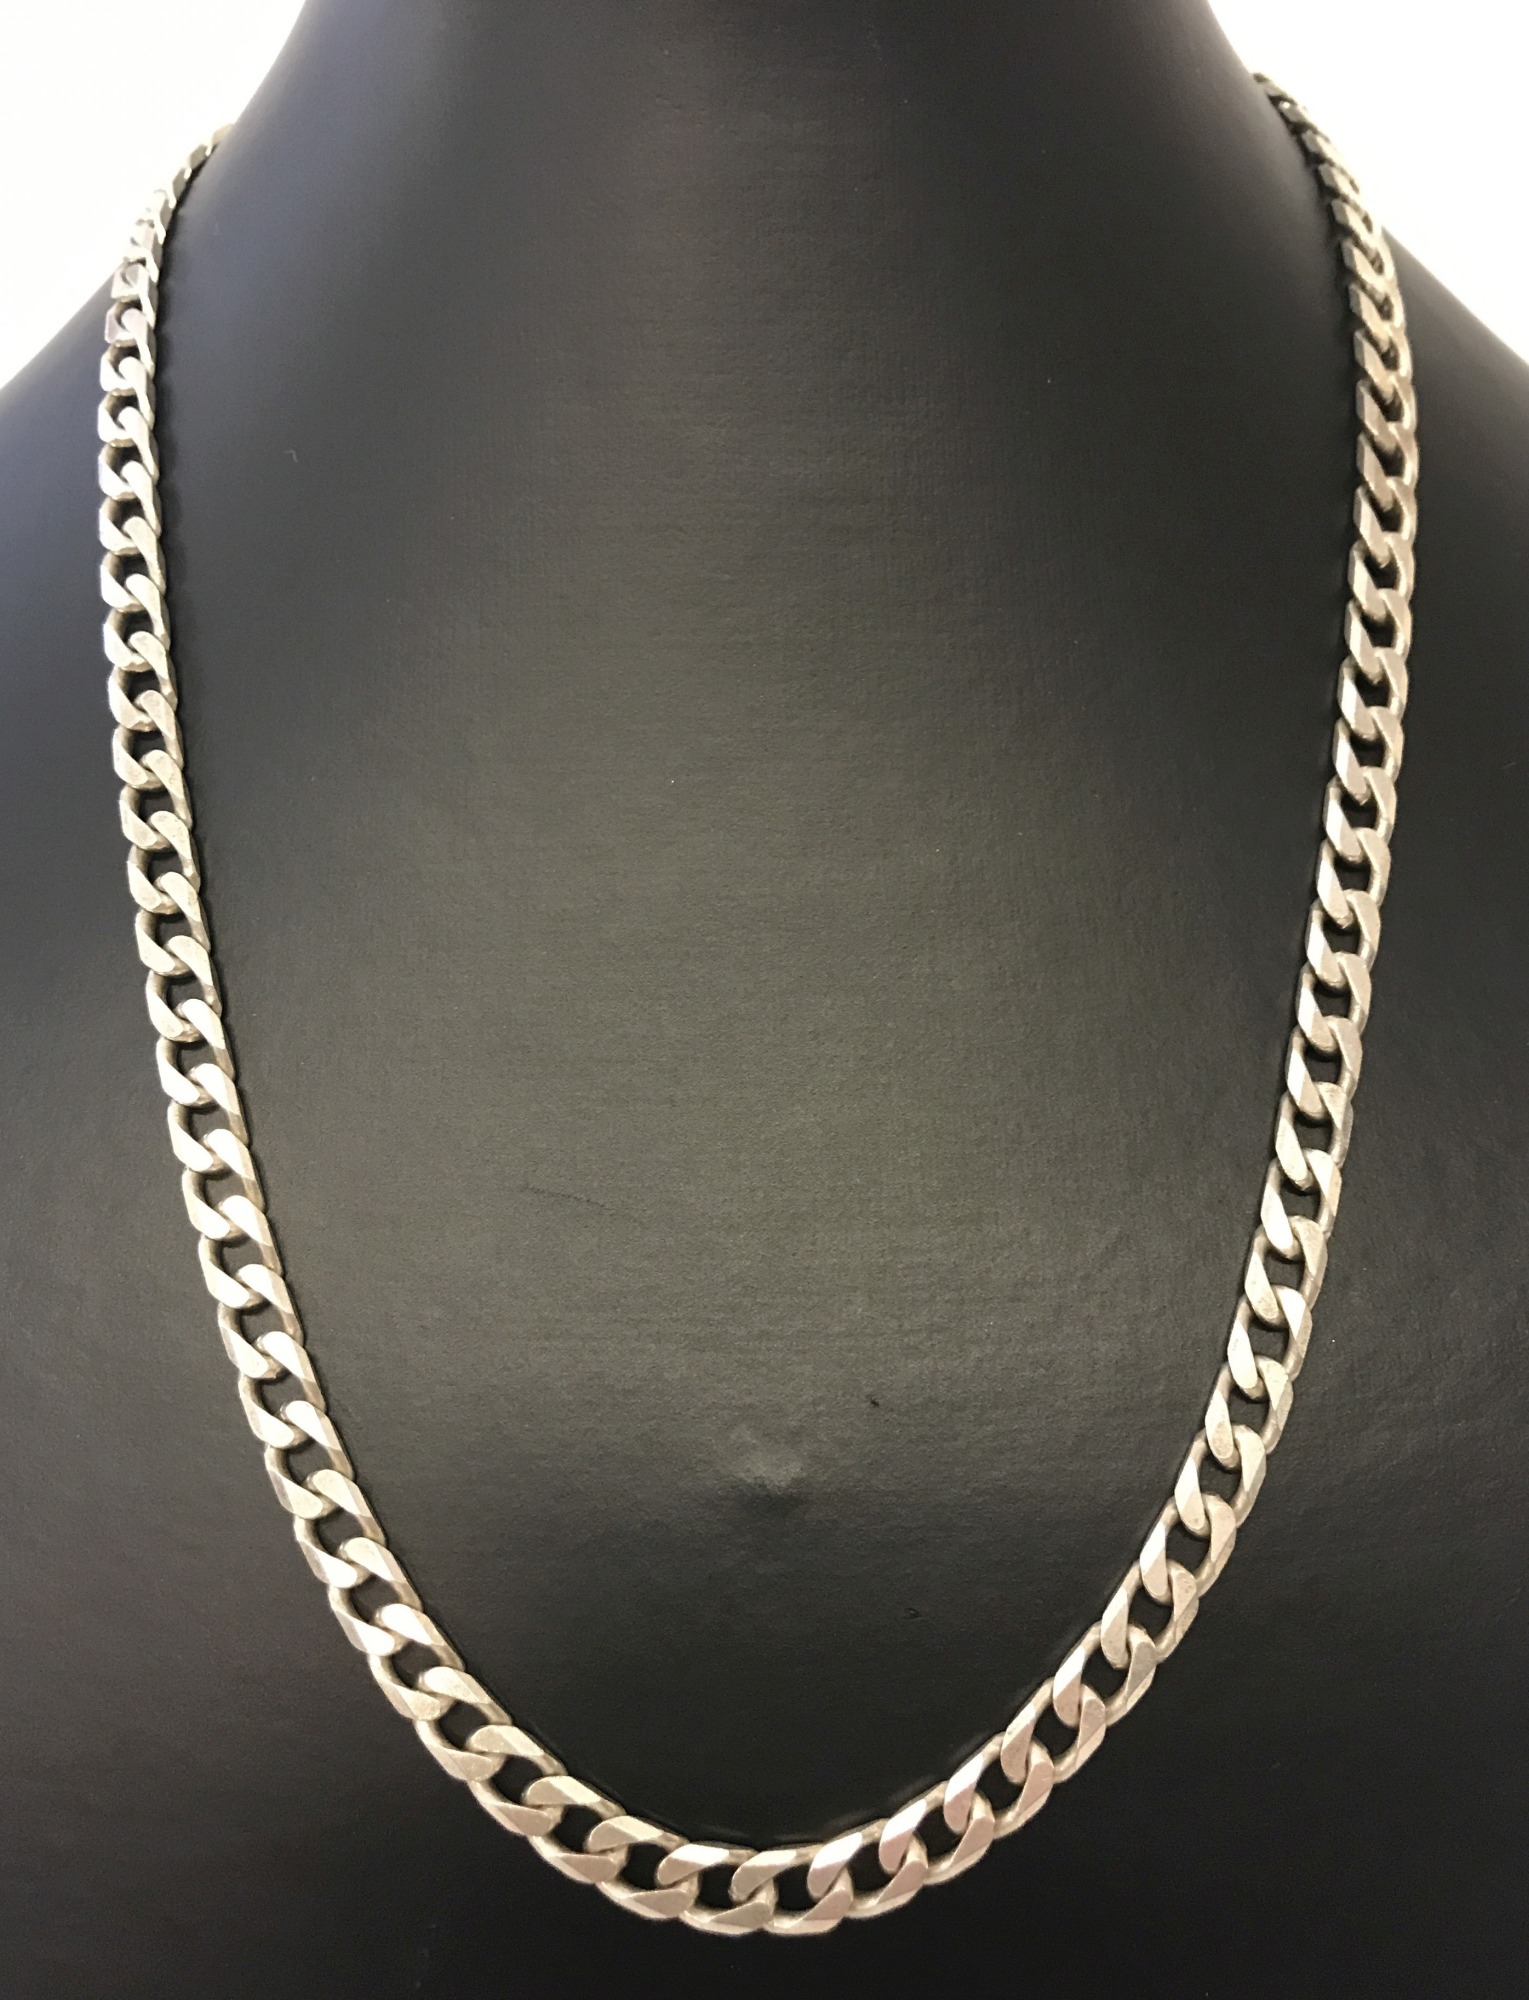 A heavy 18 inch silver curb chain.